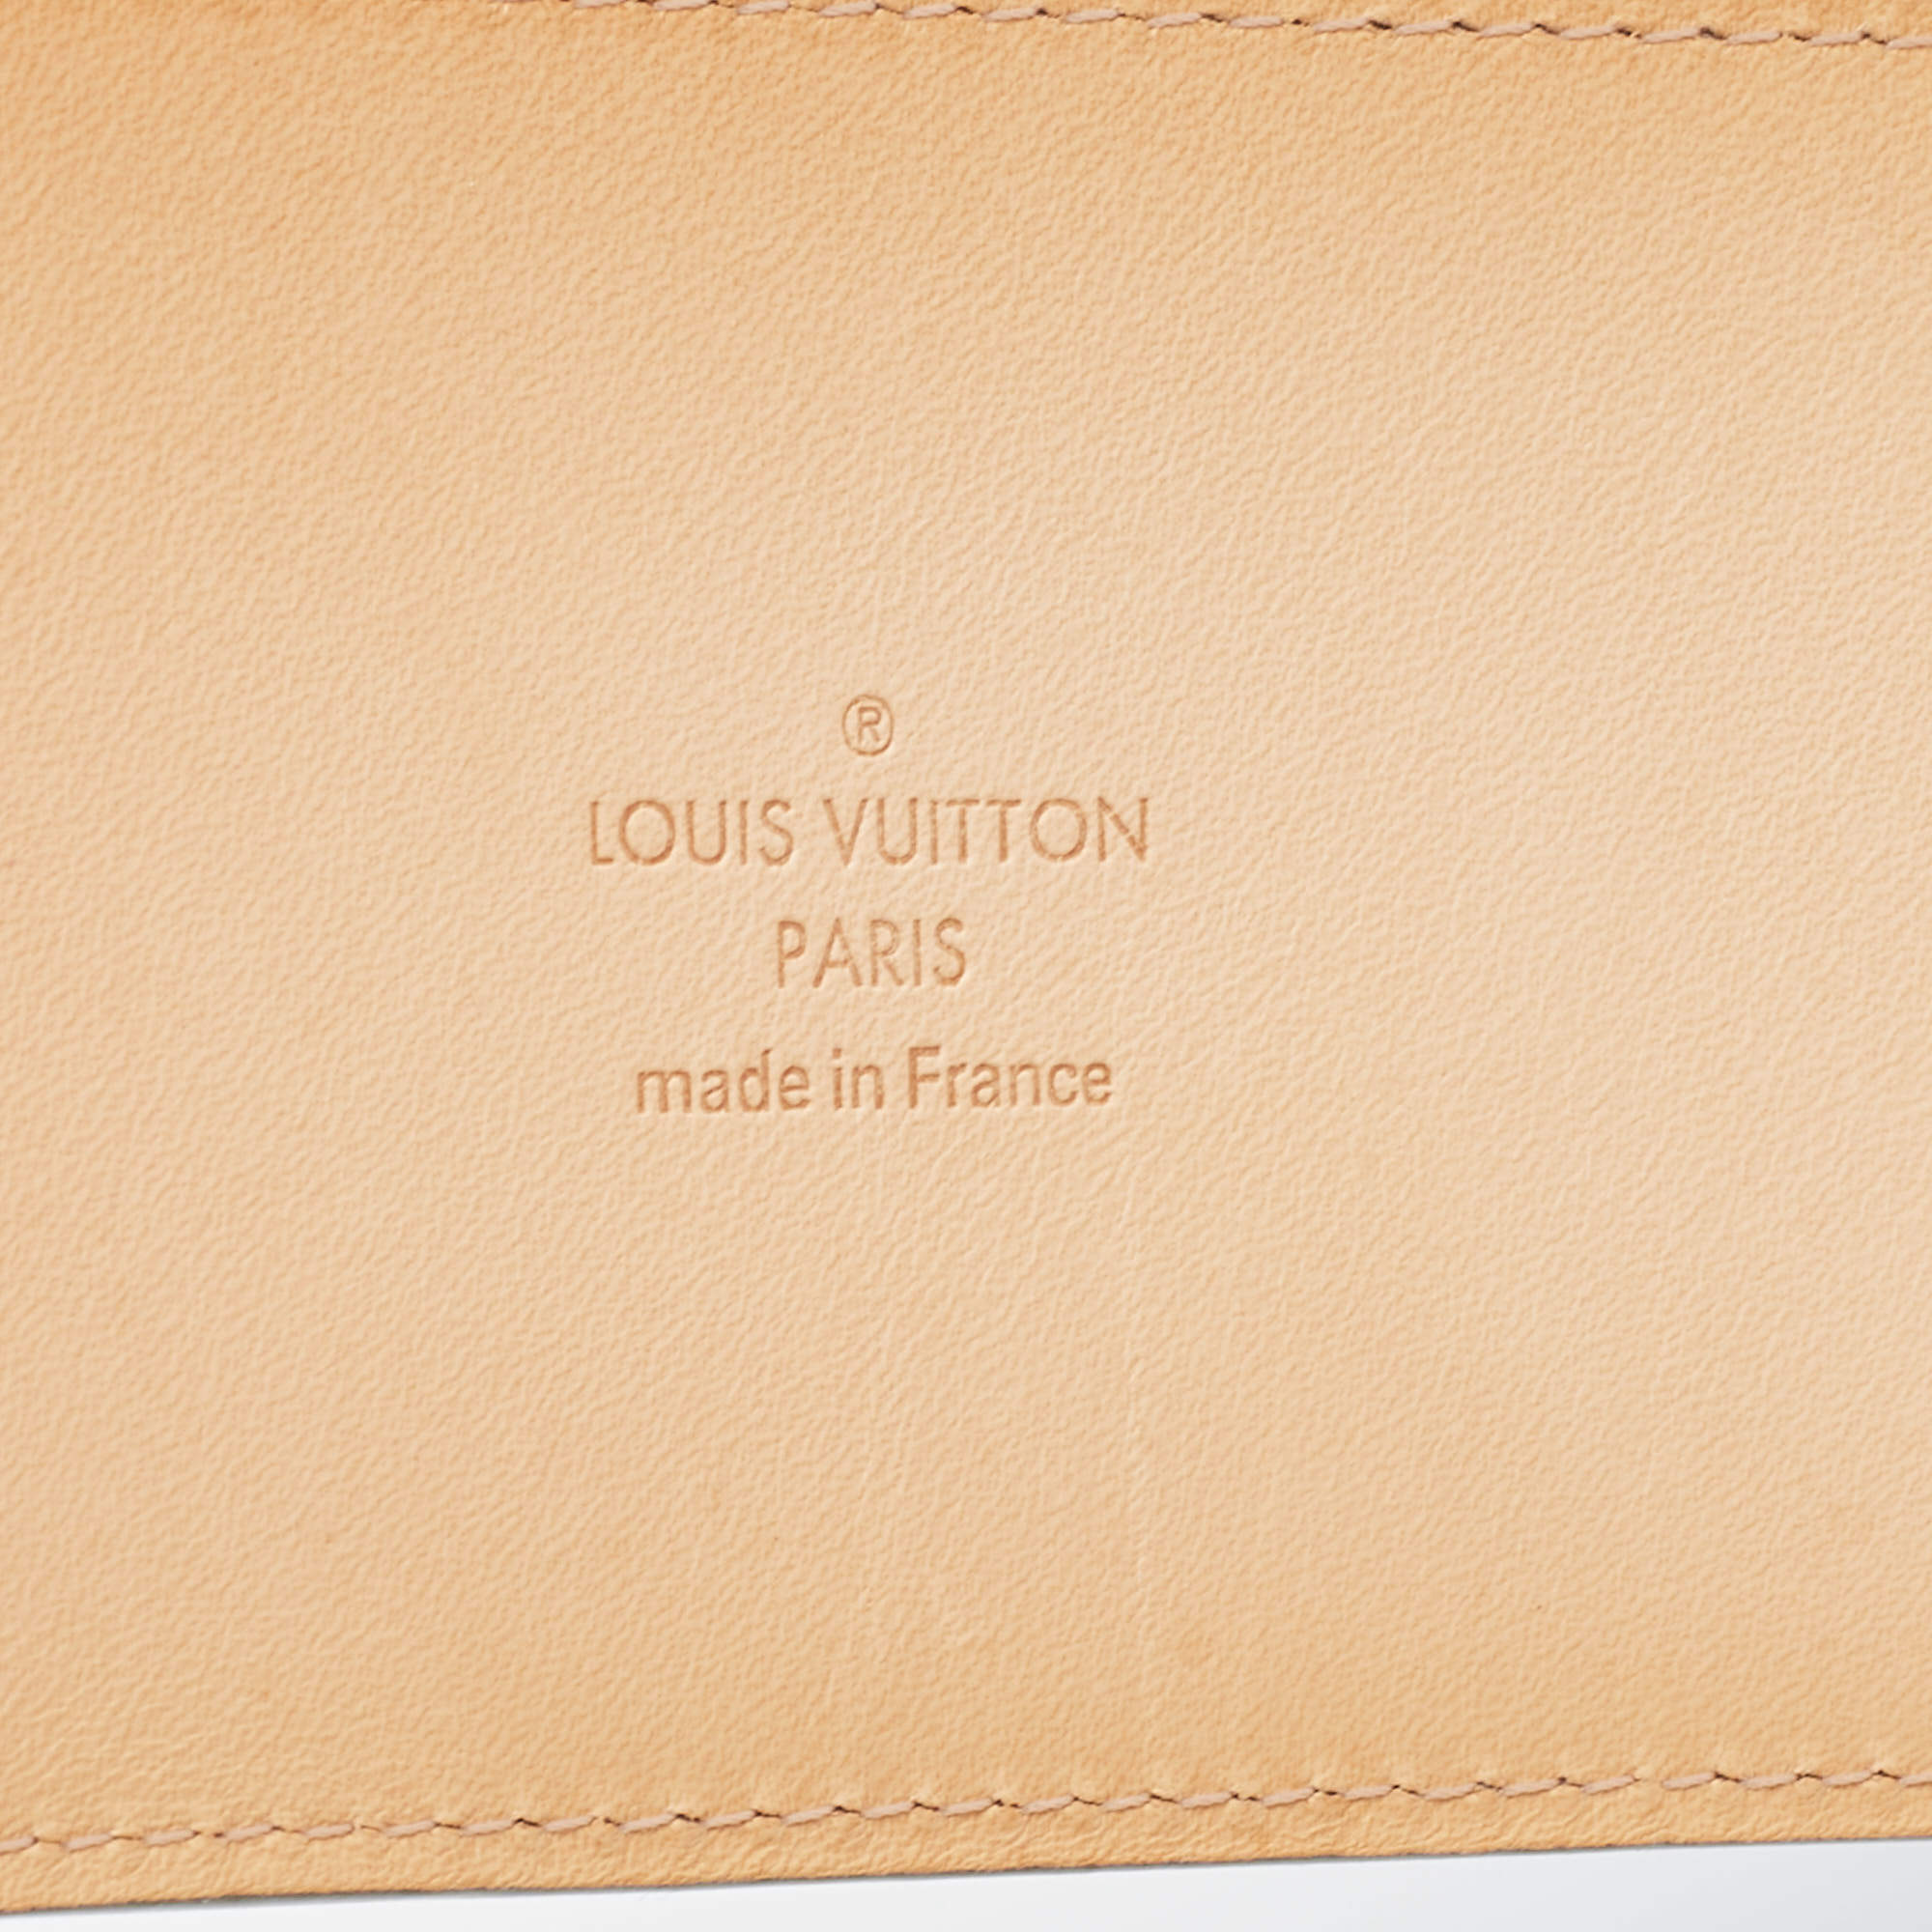 Vegan leather belt Louis Vuitton Multicolour size 85 cm in Vegan leather -  30693601